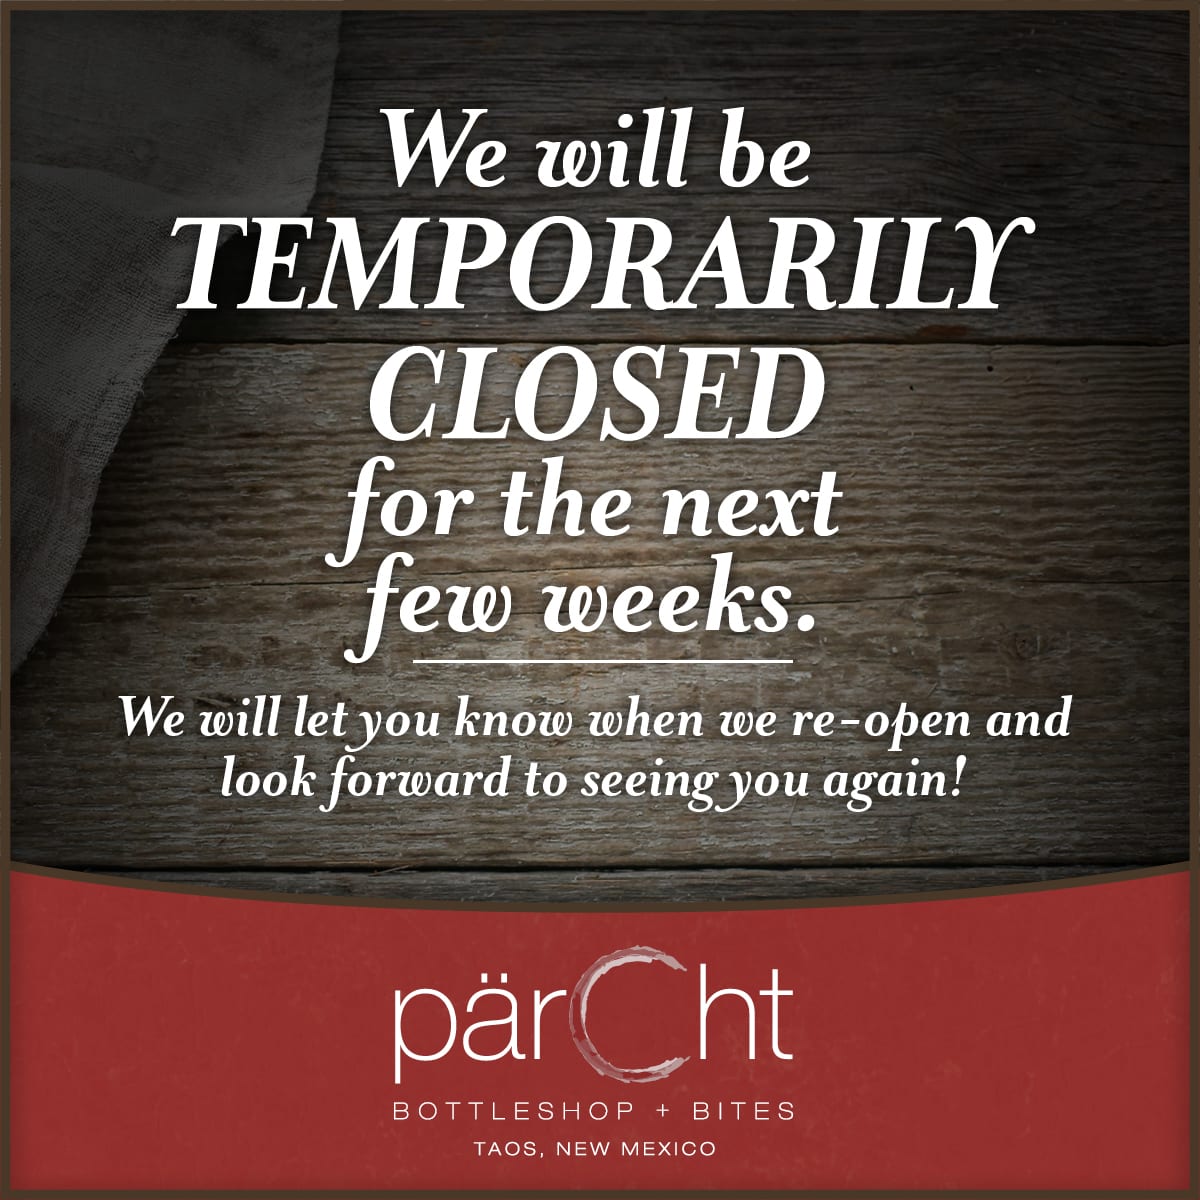 Temporarily Closed